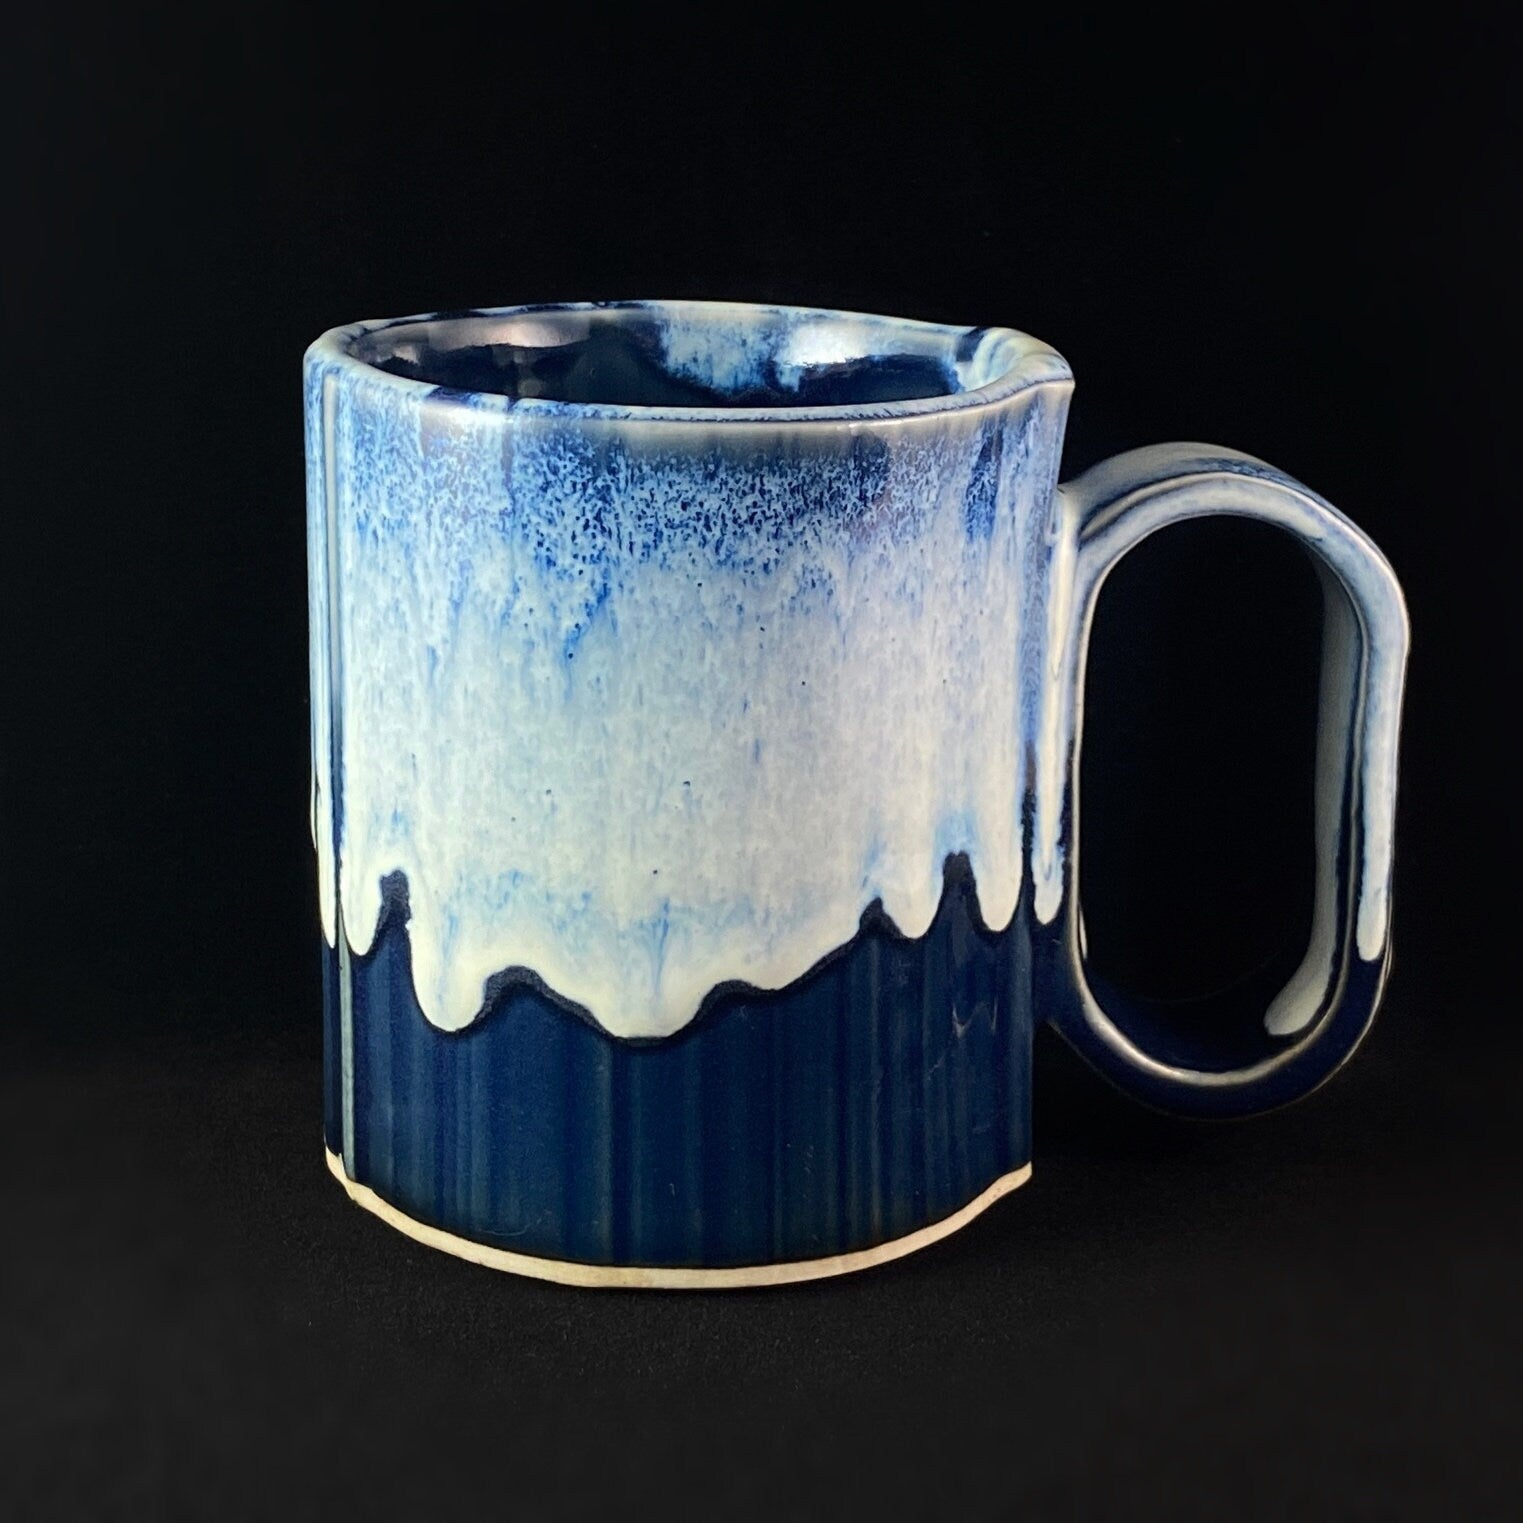 12 oz. Bay Mug, Functional Pottery Handmade in USA - Navy